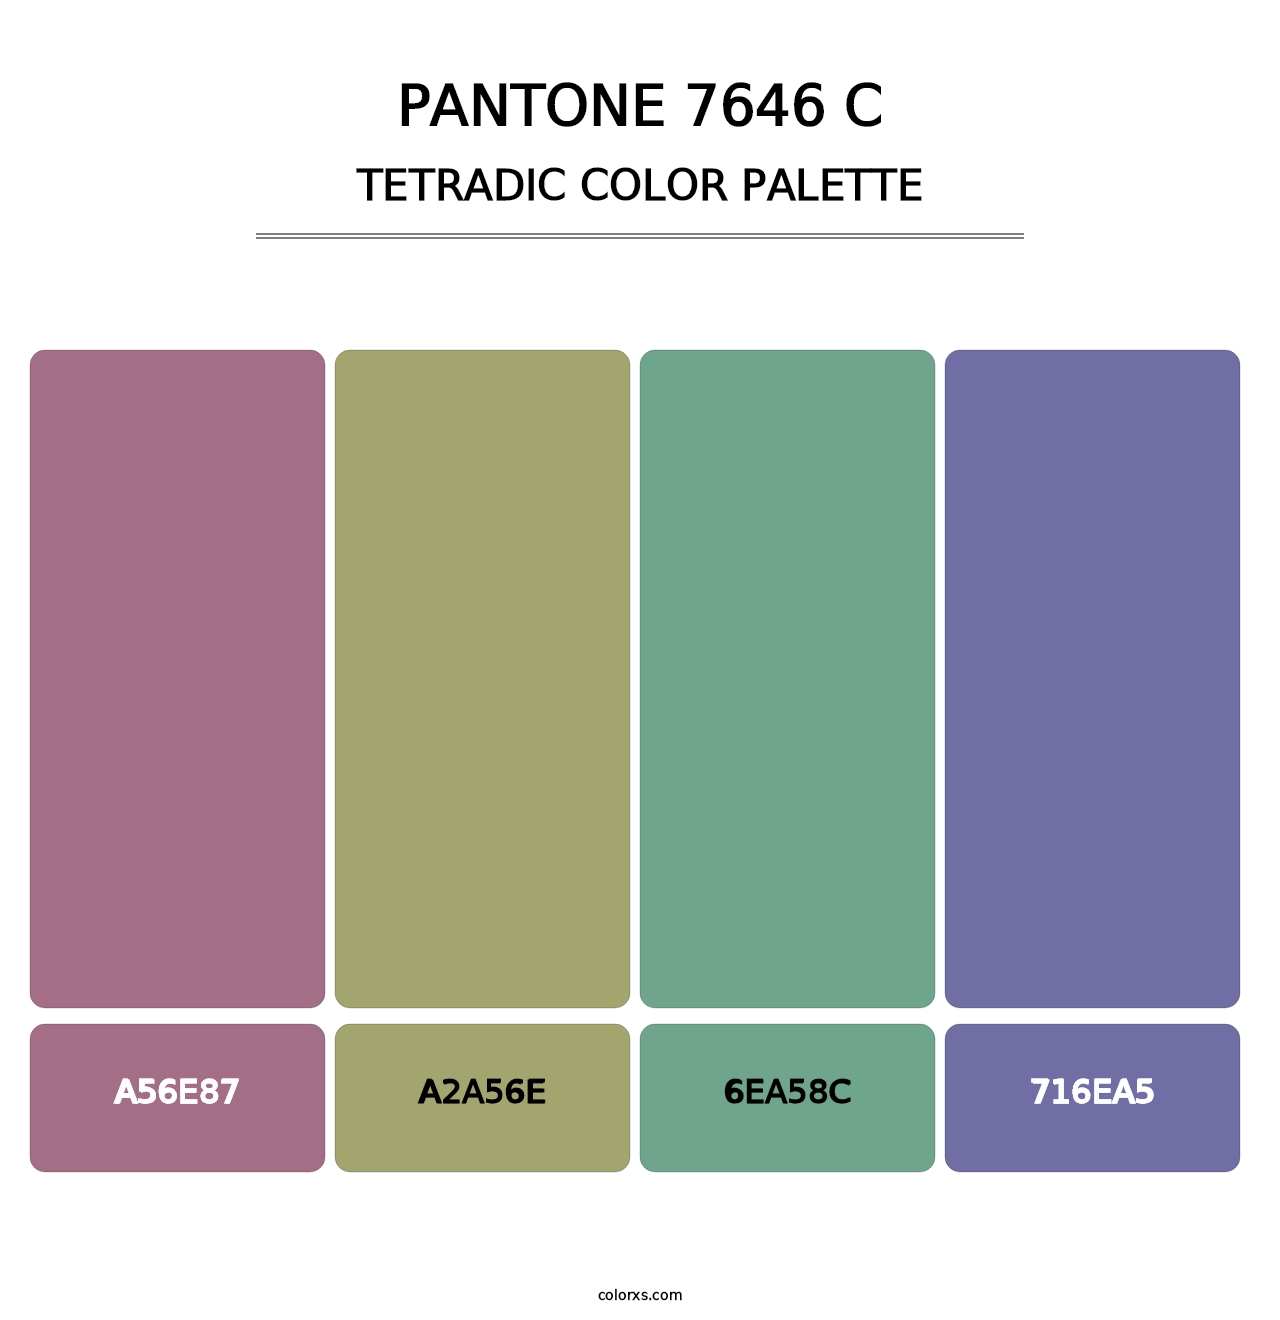 PANTONE 7646 C - Tetradic Color Palette